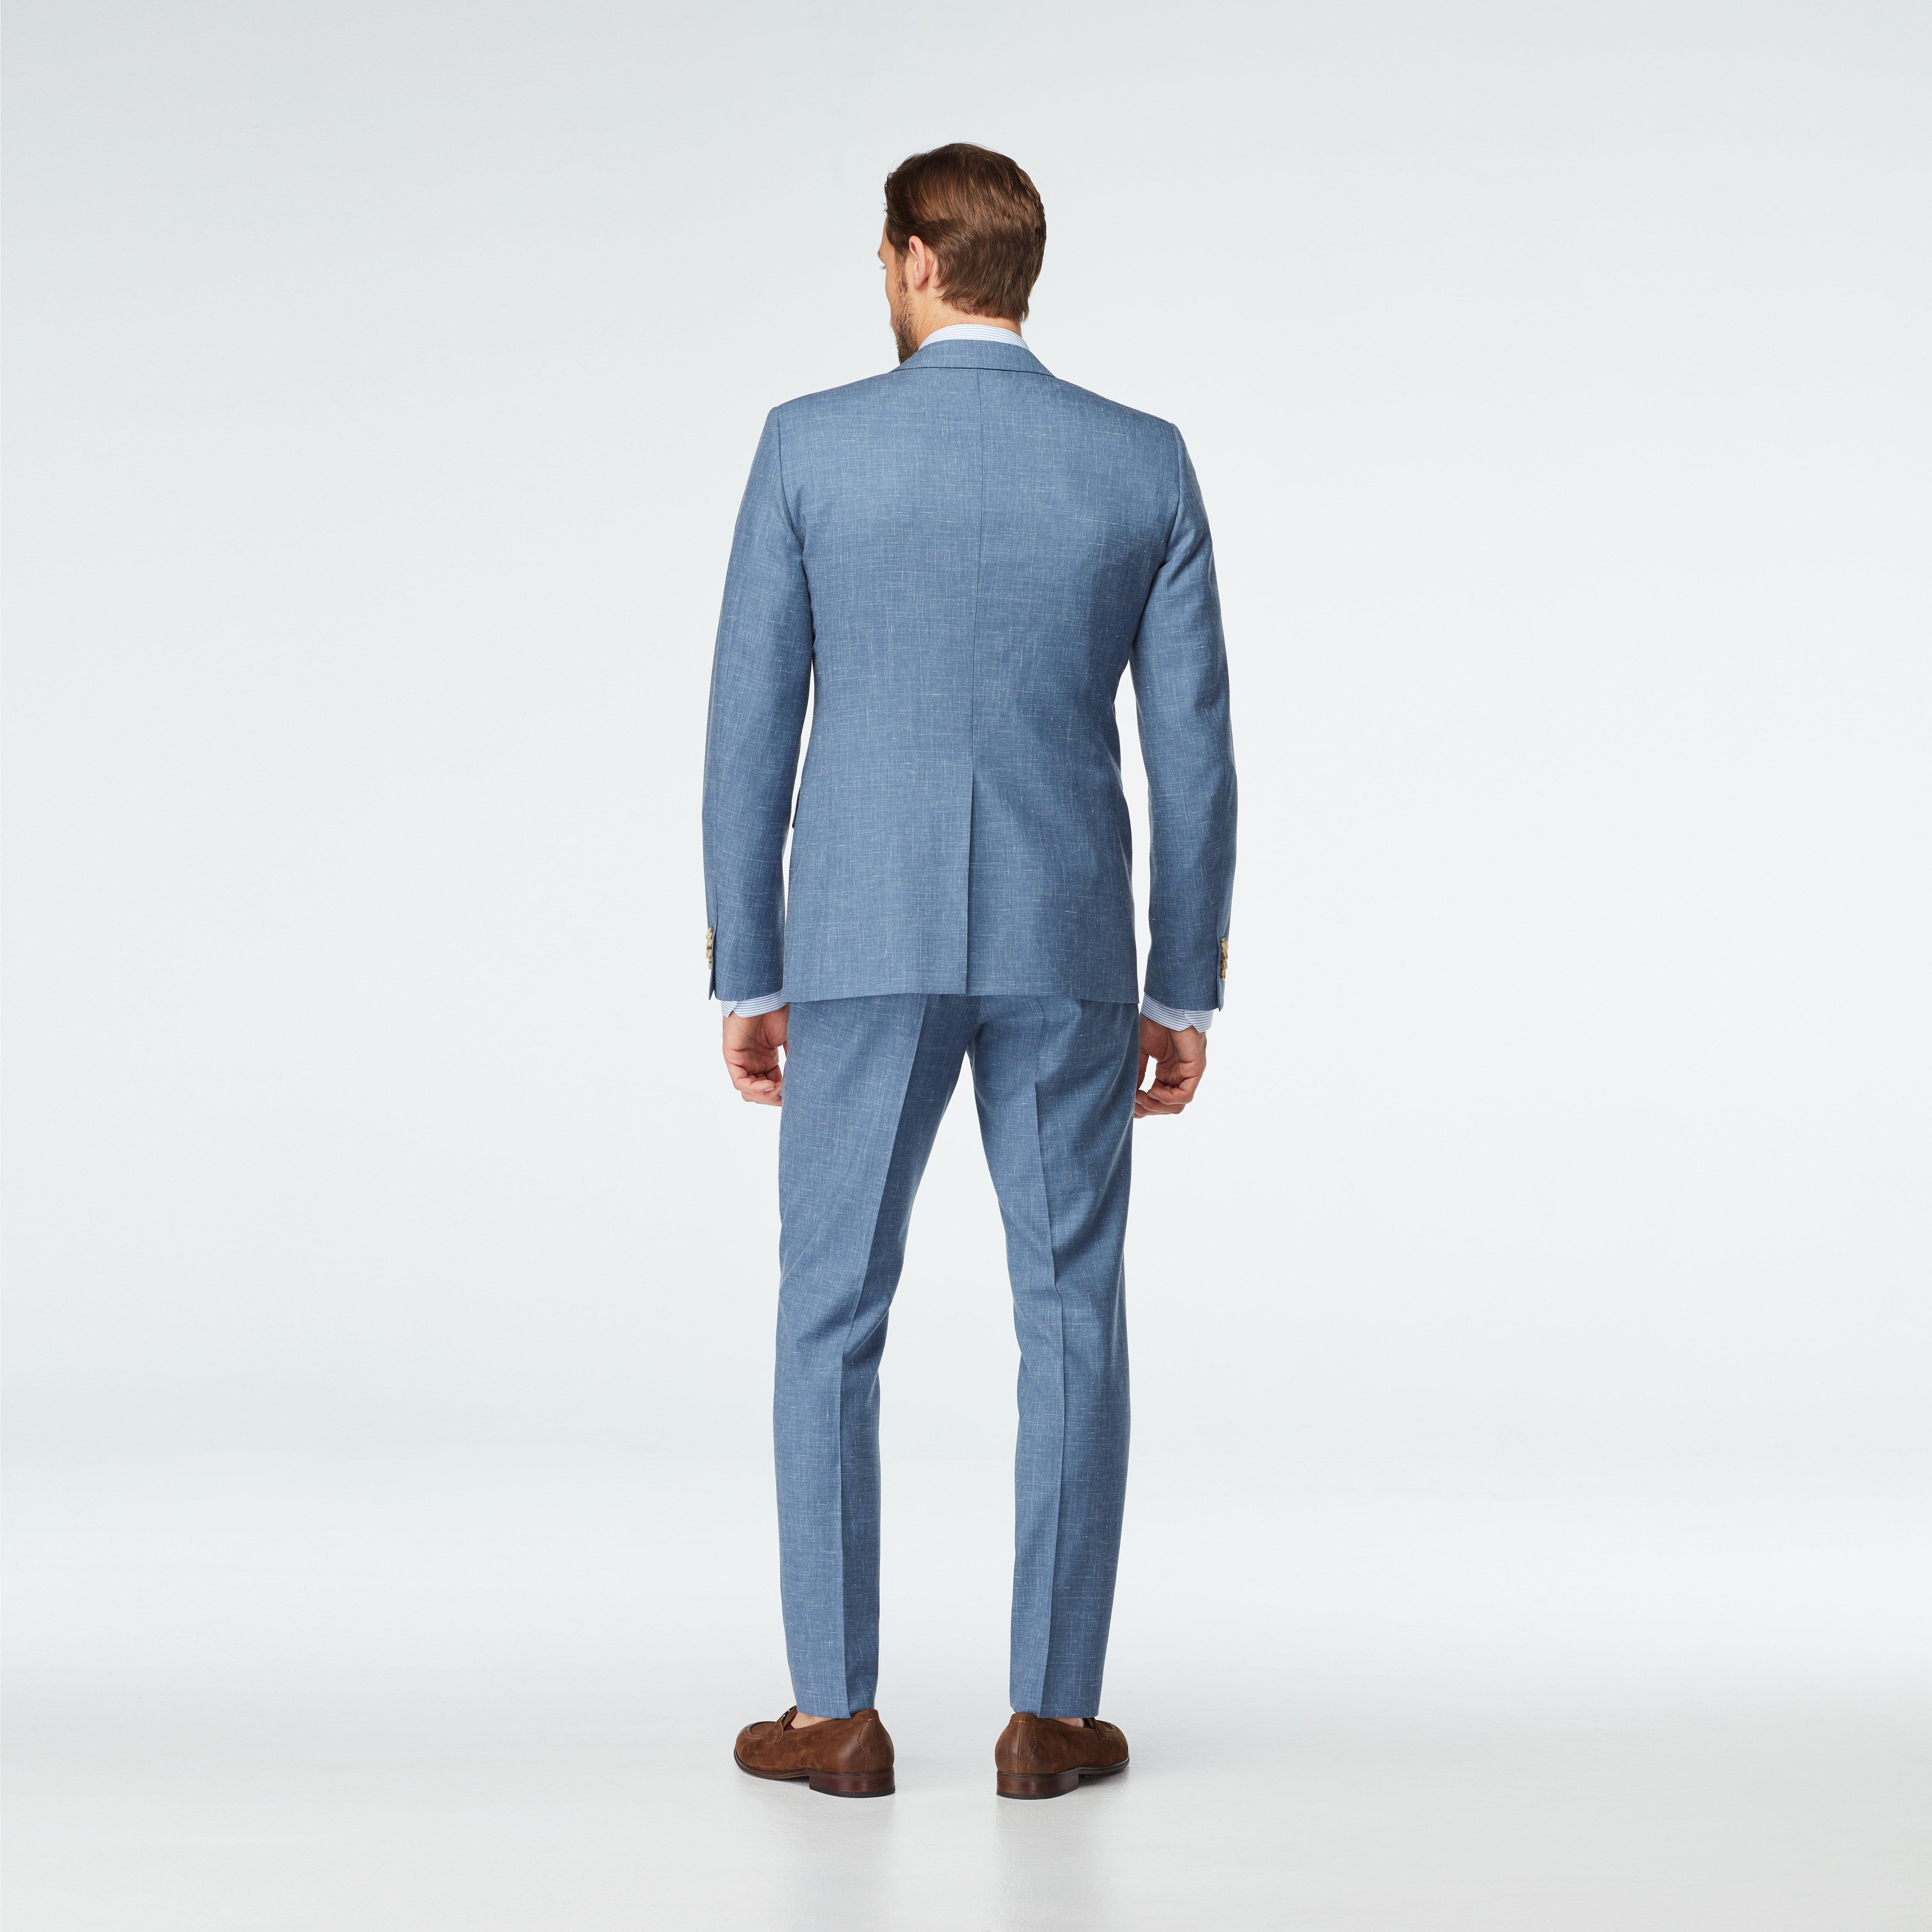 Stockport Wool Linen Light Blue Suit (59683223)